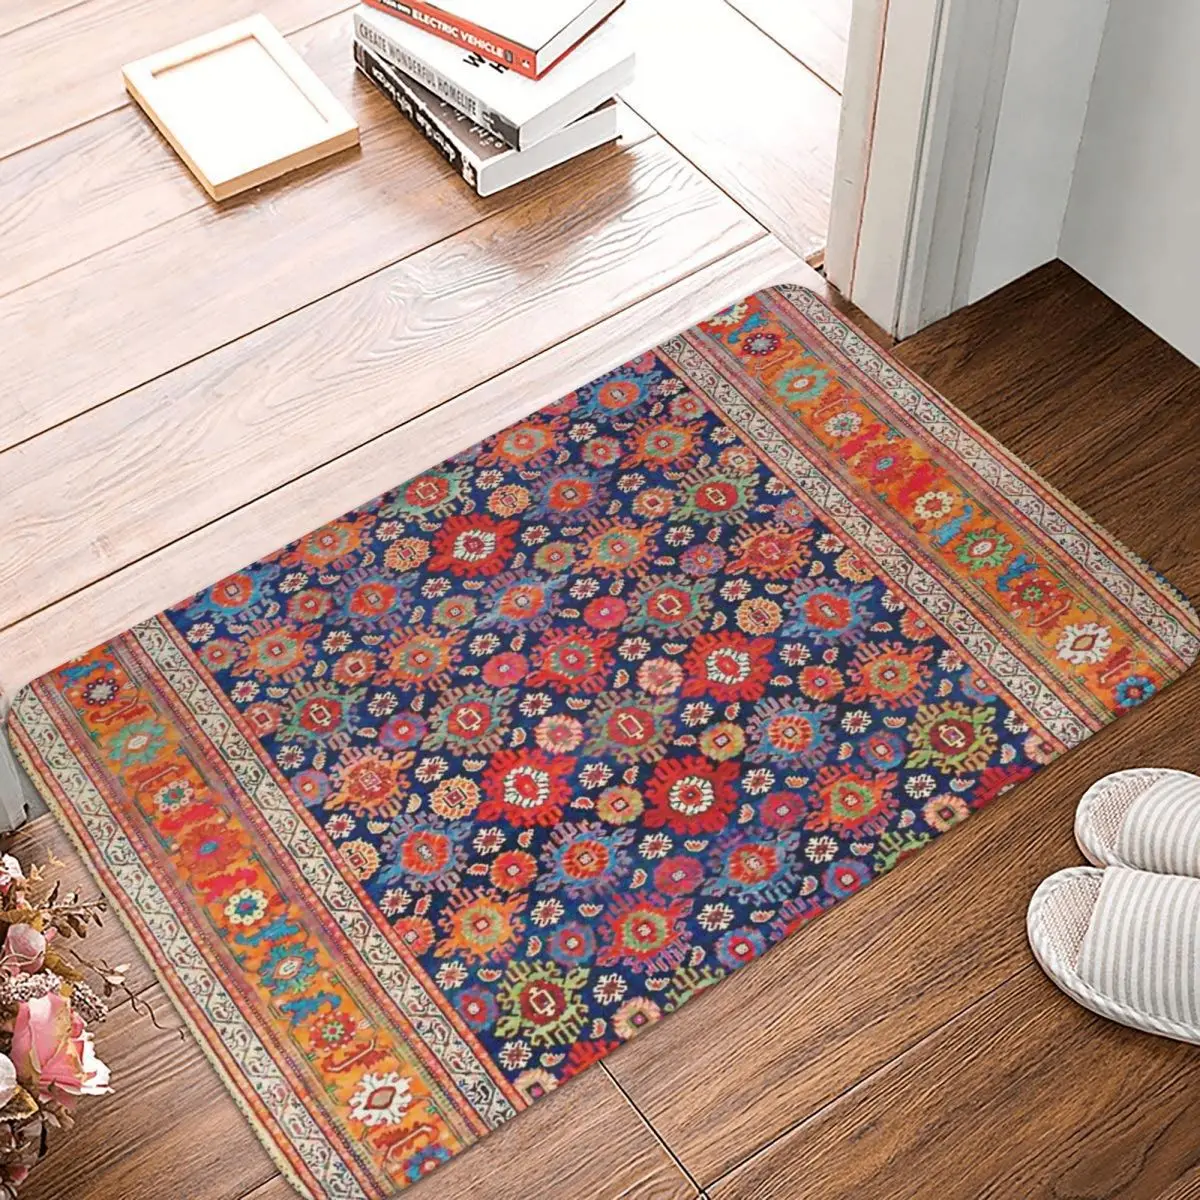 

West Persian Antique Doormat Carpet Mat Rug Polyester Anti-slip Floor Decor Bath Bathroom Kitchen Balcony 40x60